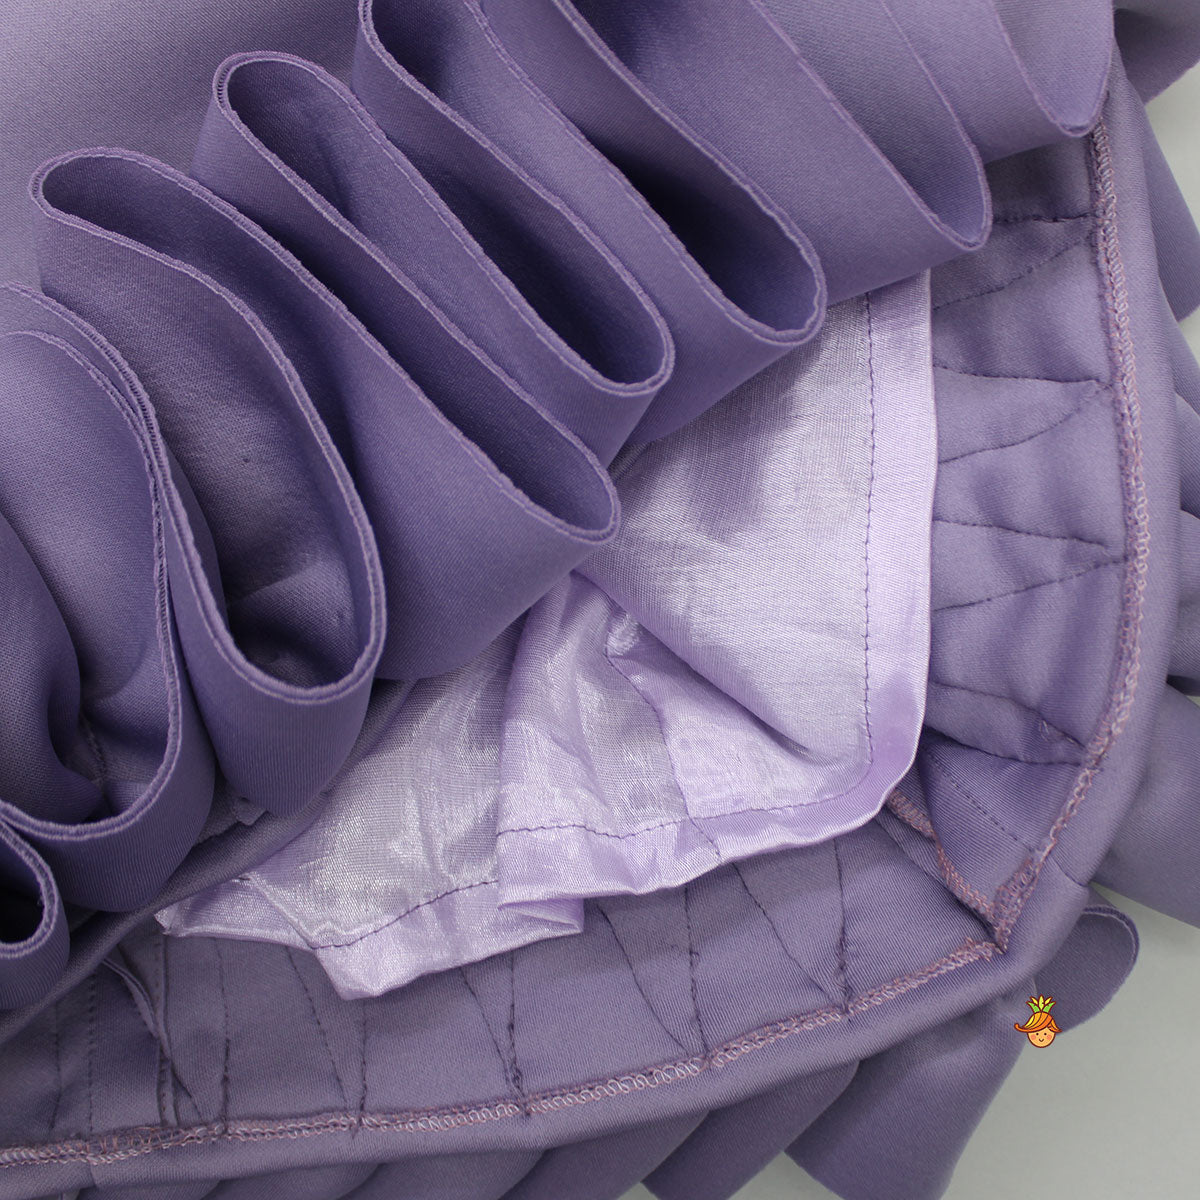 Pre Order: Elegant Lavender Ruffle Dress With Matching Sling Bag